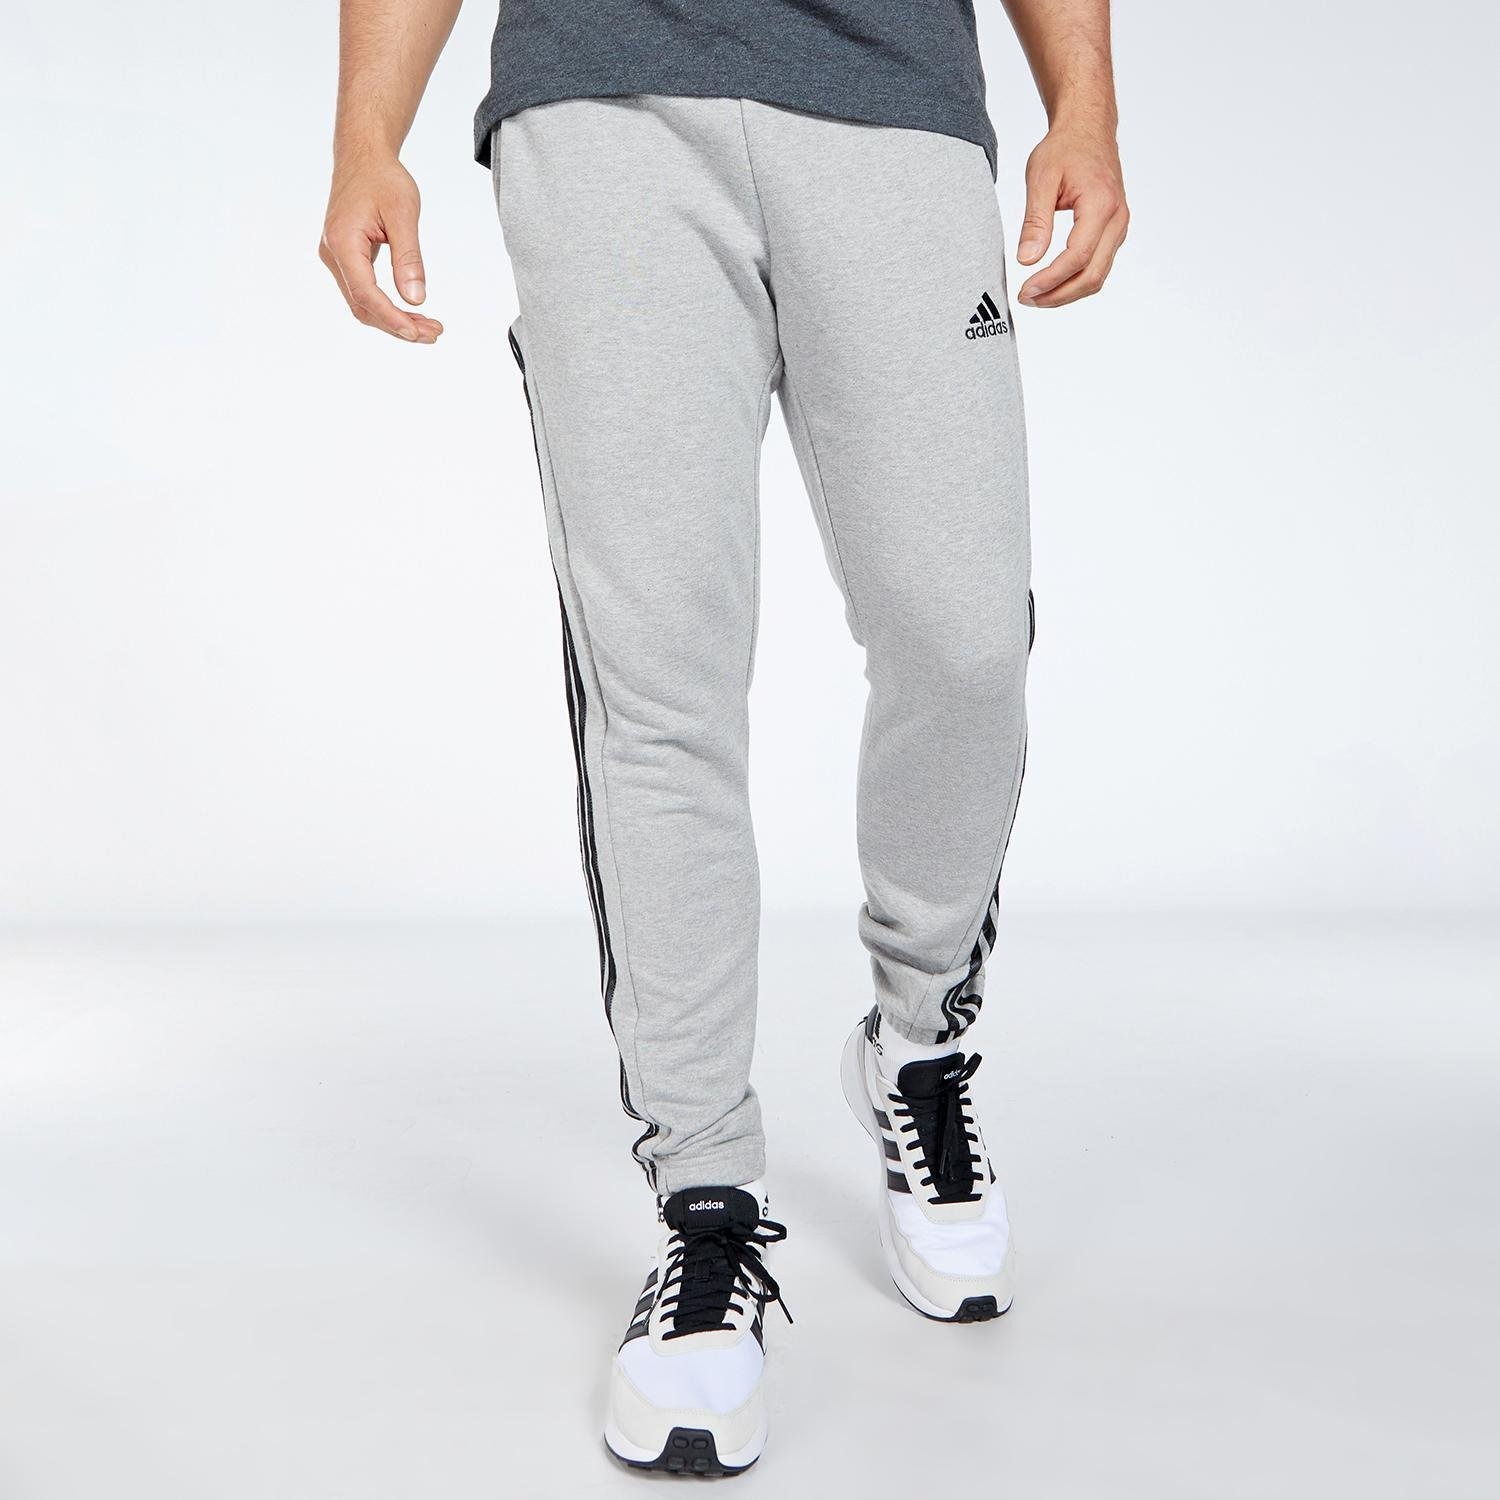 Adidas essential 3 stripes joggingbroek in de kleur grijs.